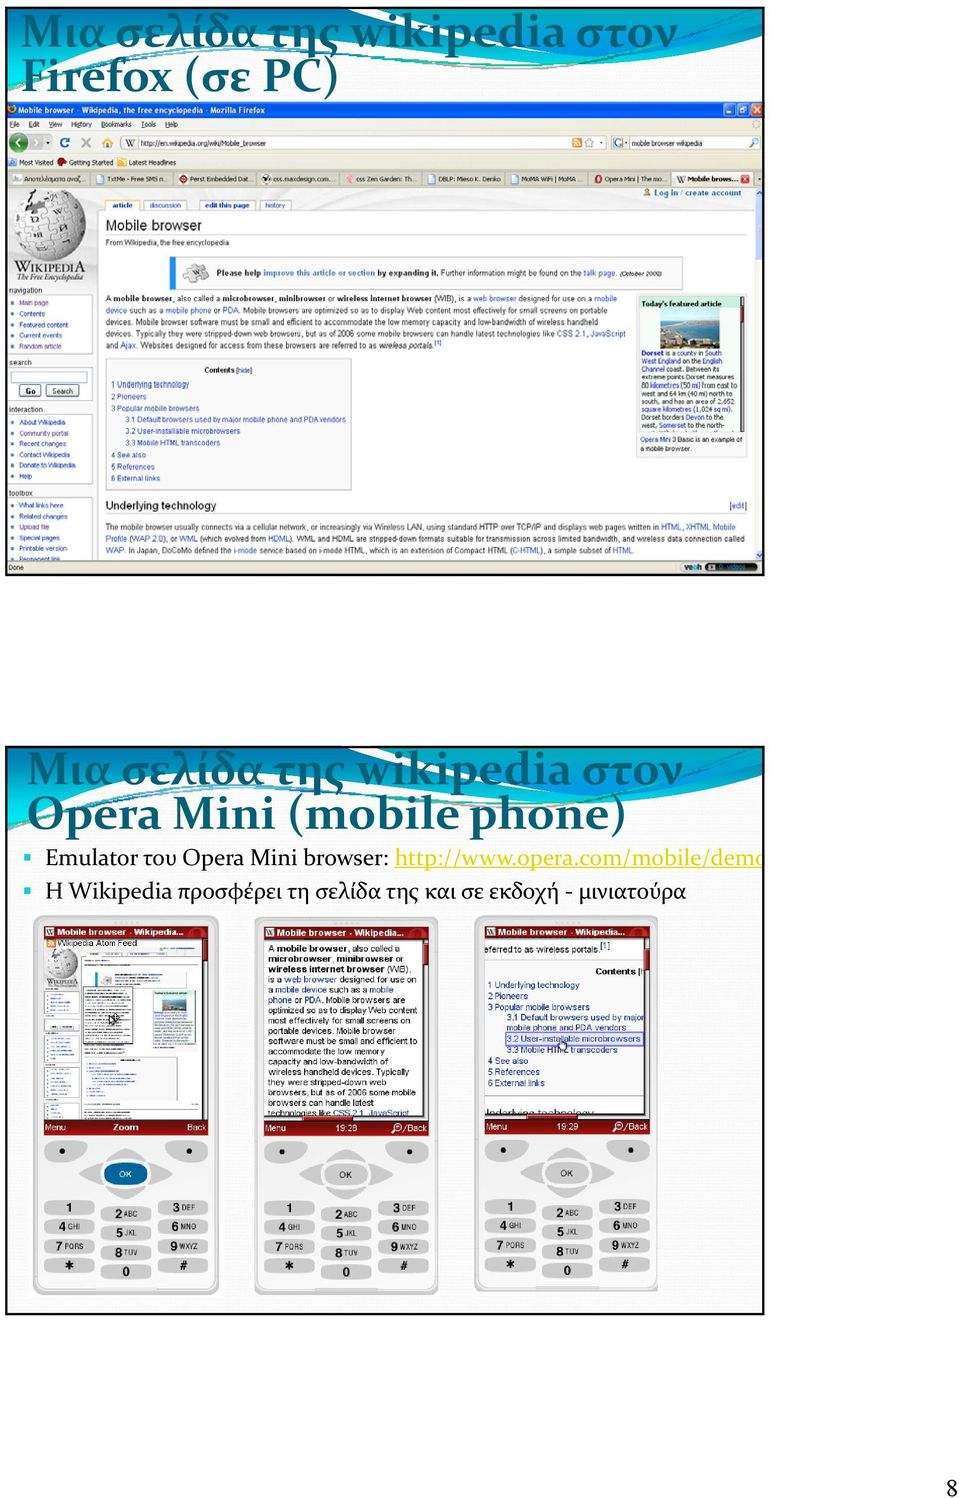 Opera Mini browser: http://www.opera.